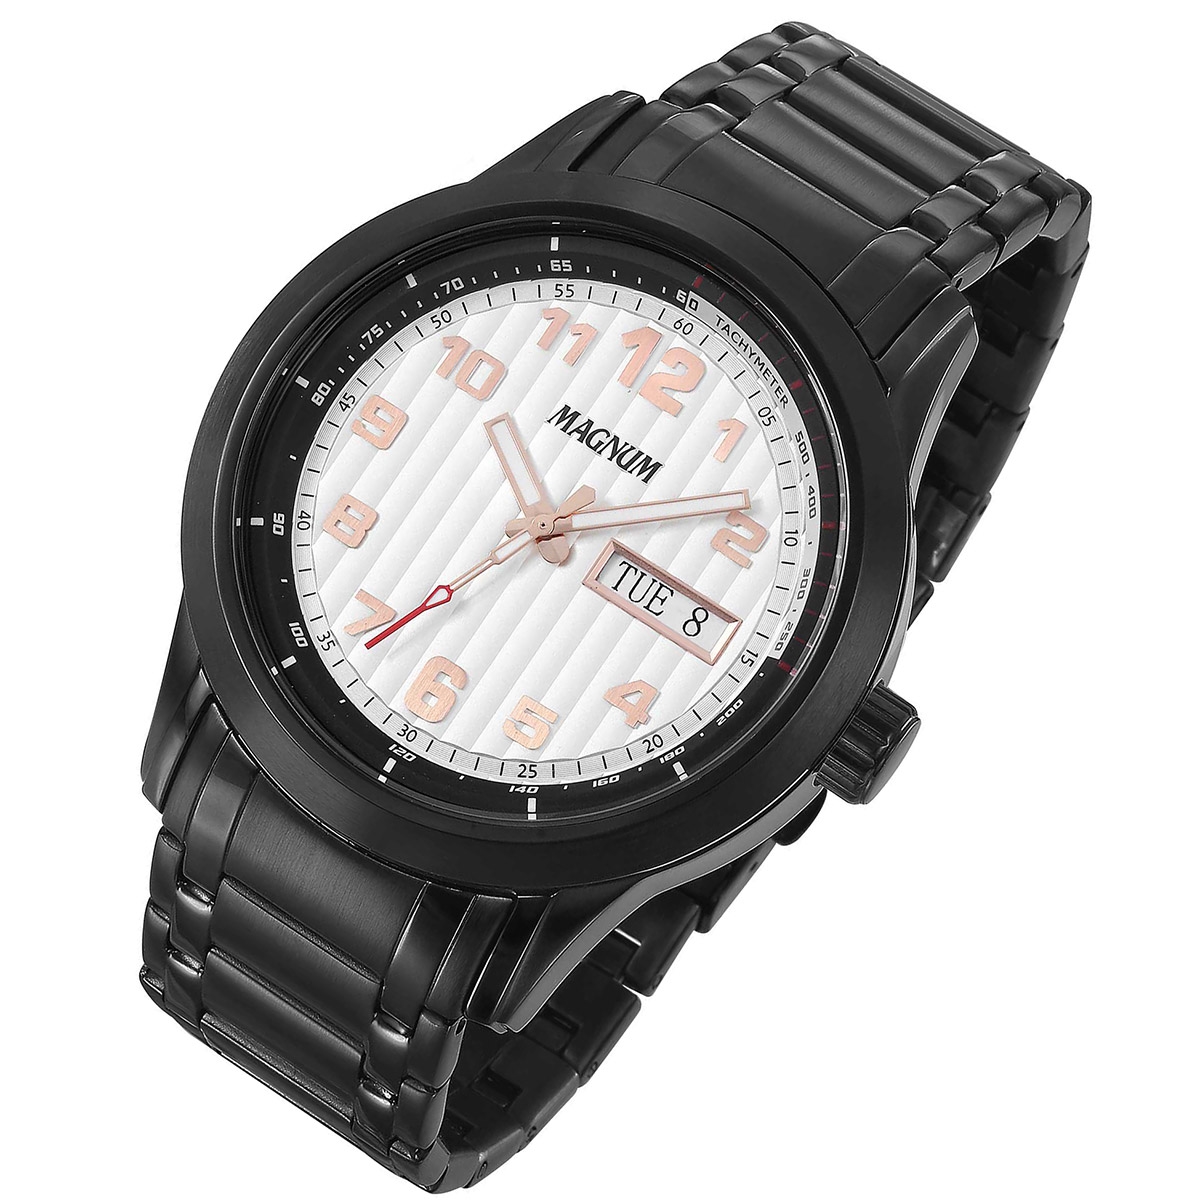 Relógio Magnum Masculino Chumbo- MA32541W - Prata